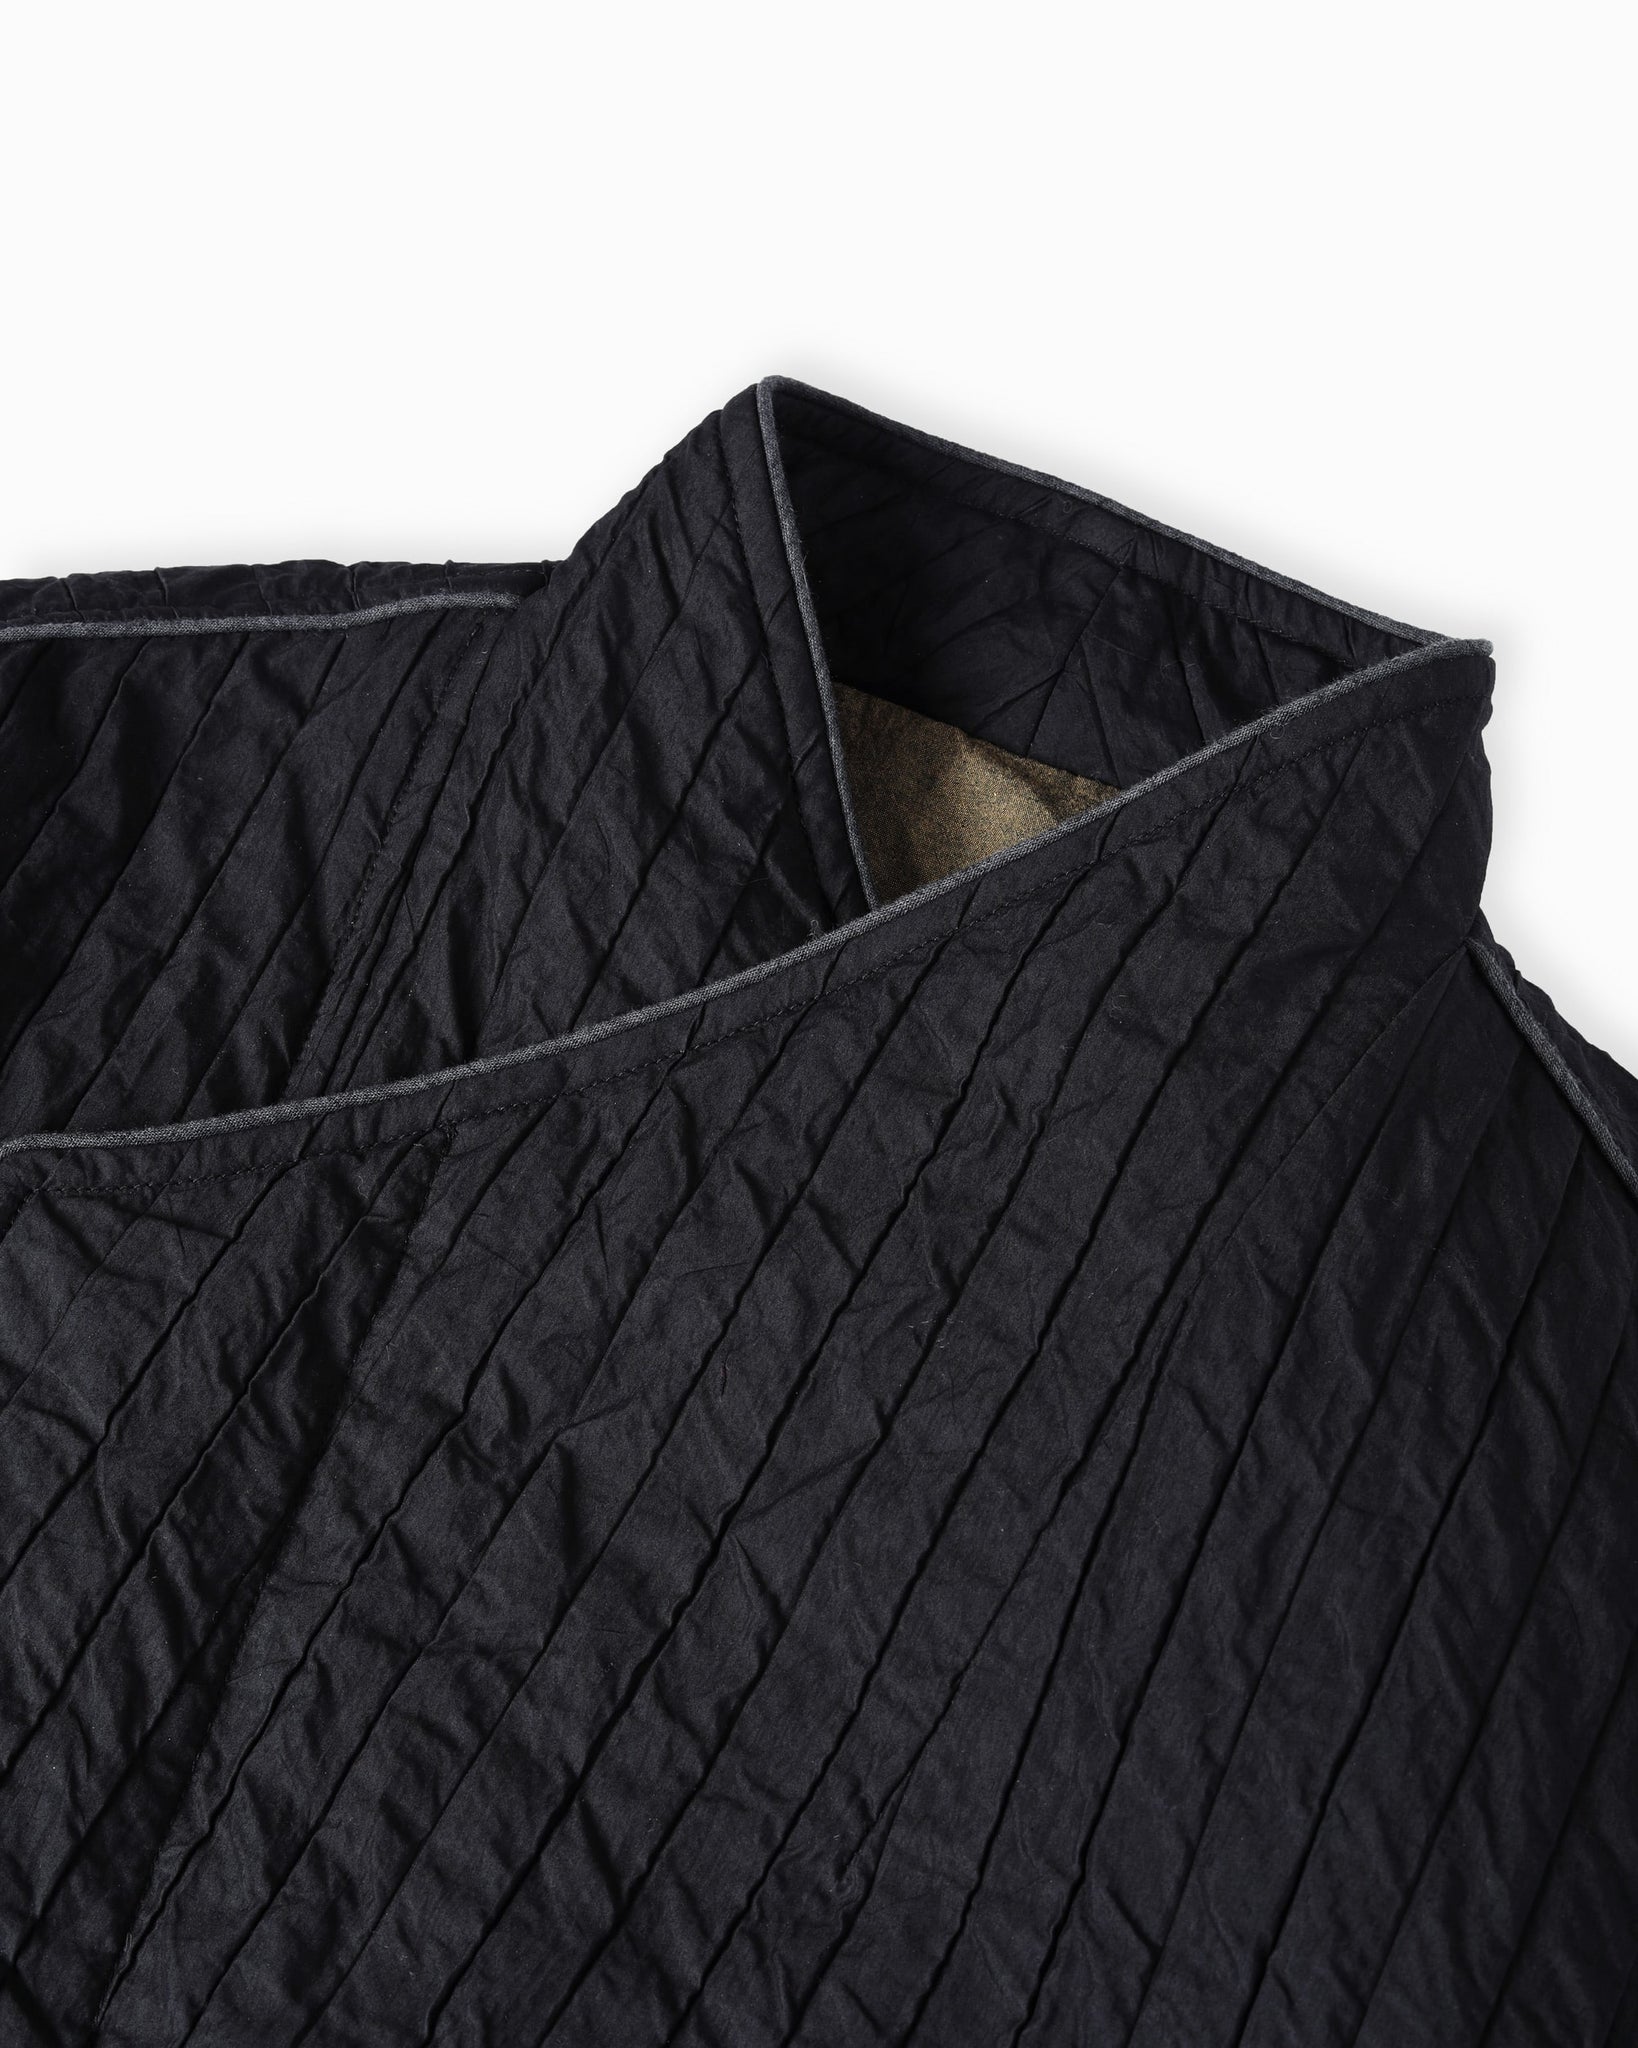 ROSEN Shibui Padded Coat in Pleated Cotton